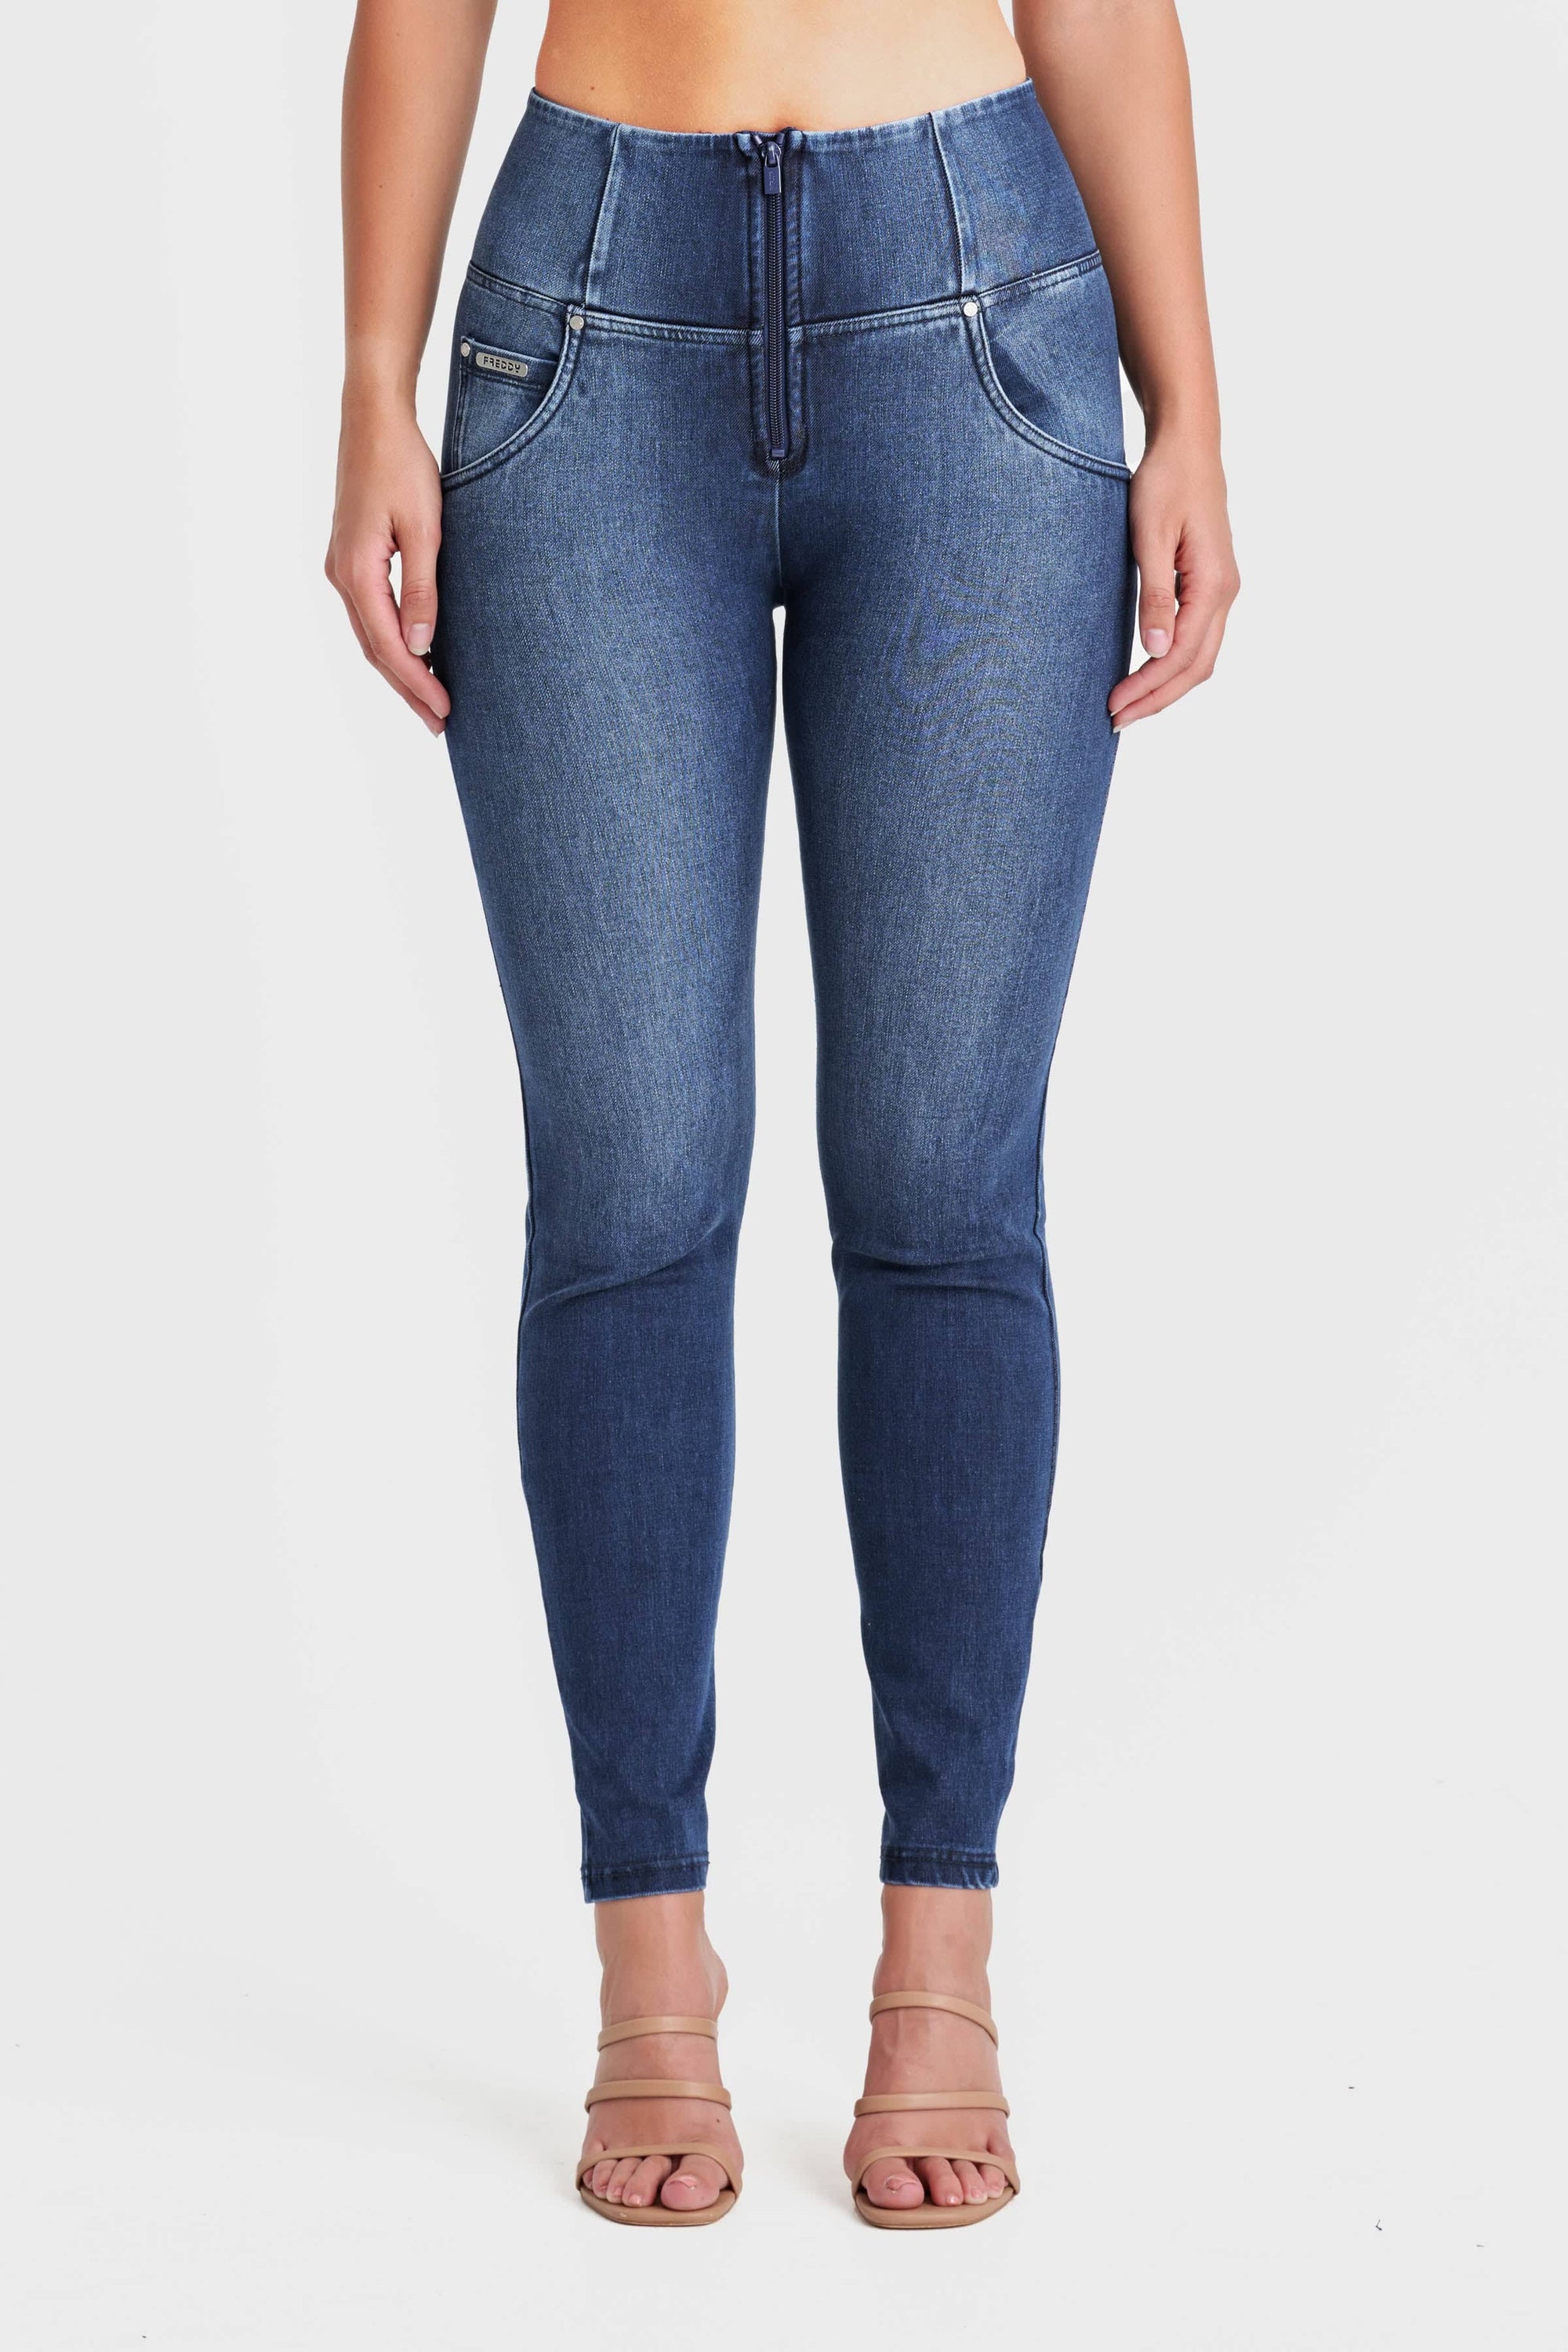 WR.UP® Snug Jeans - High Waisted - Full Length - Dark Blue + Blue Stitching 6